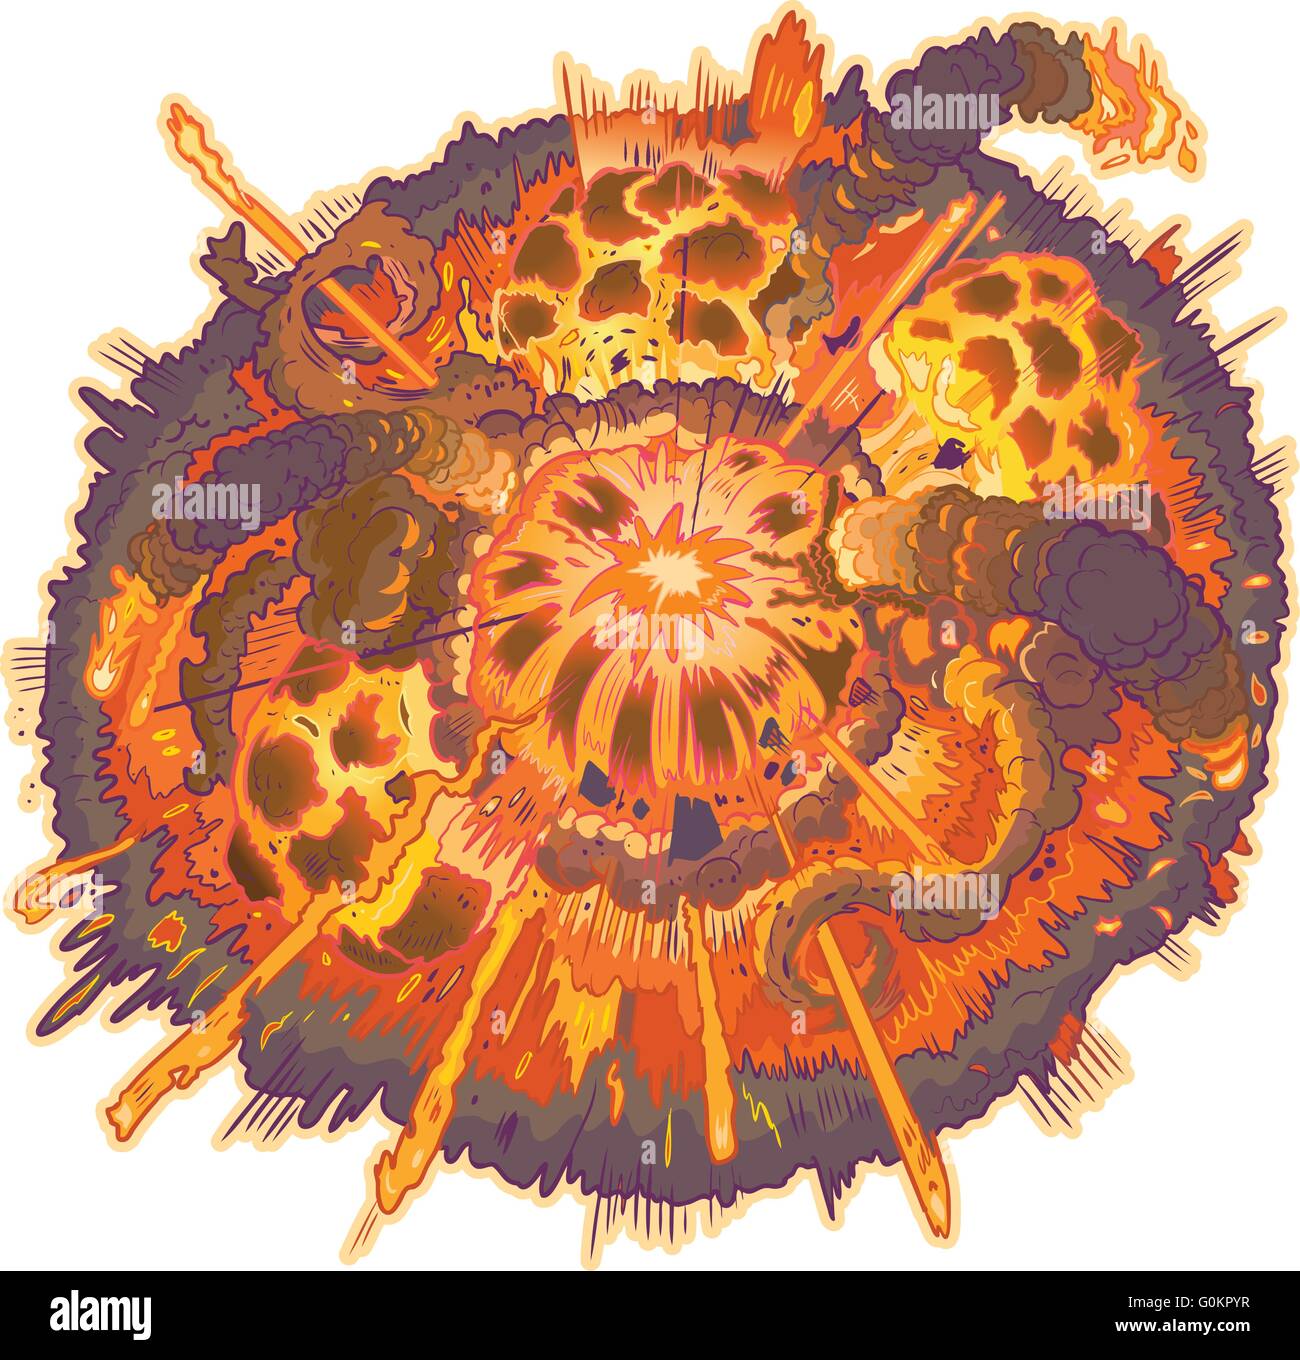 Vector cartoon clip art illustration of an explosion with fireballs, smoke and flying debris. Stock Vector